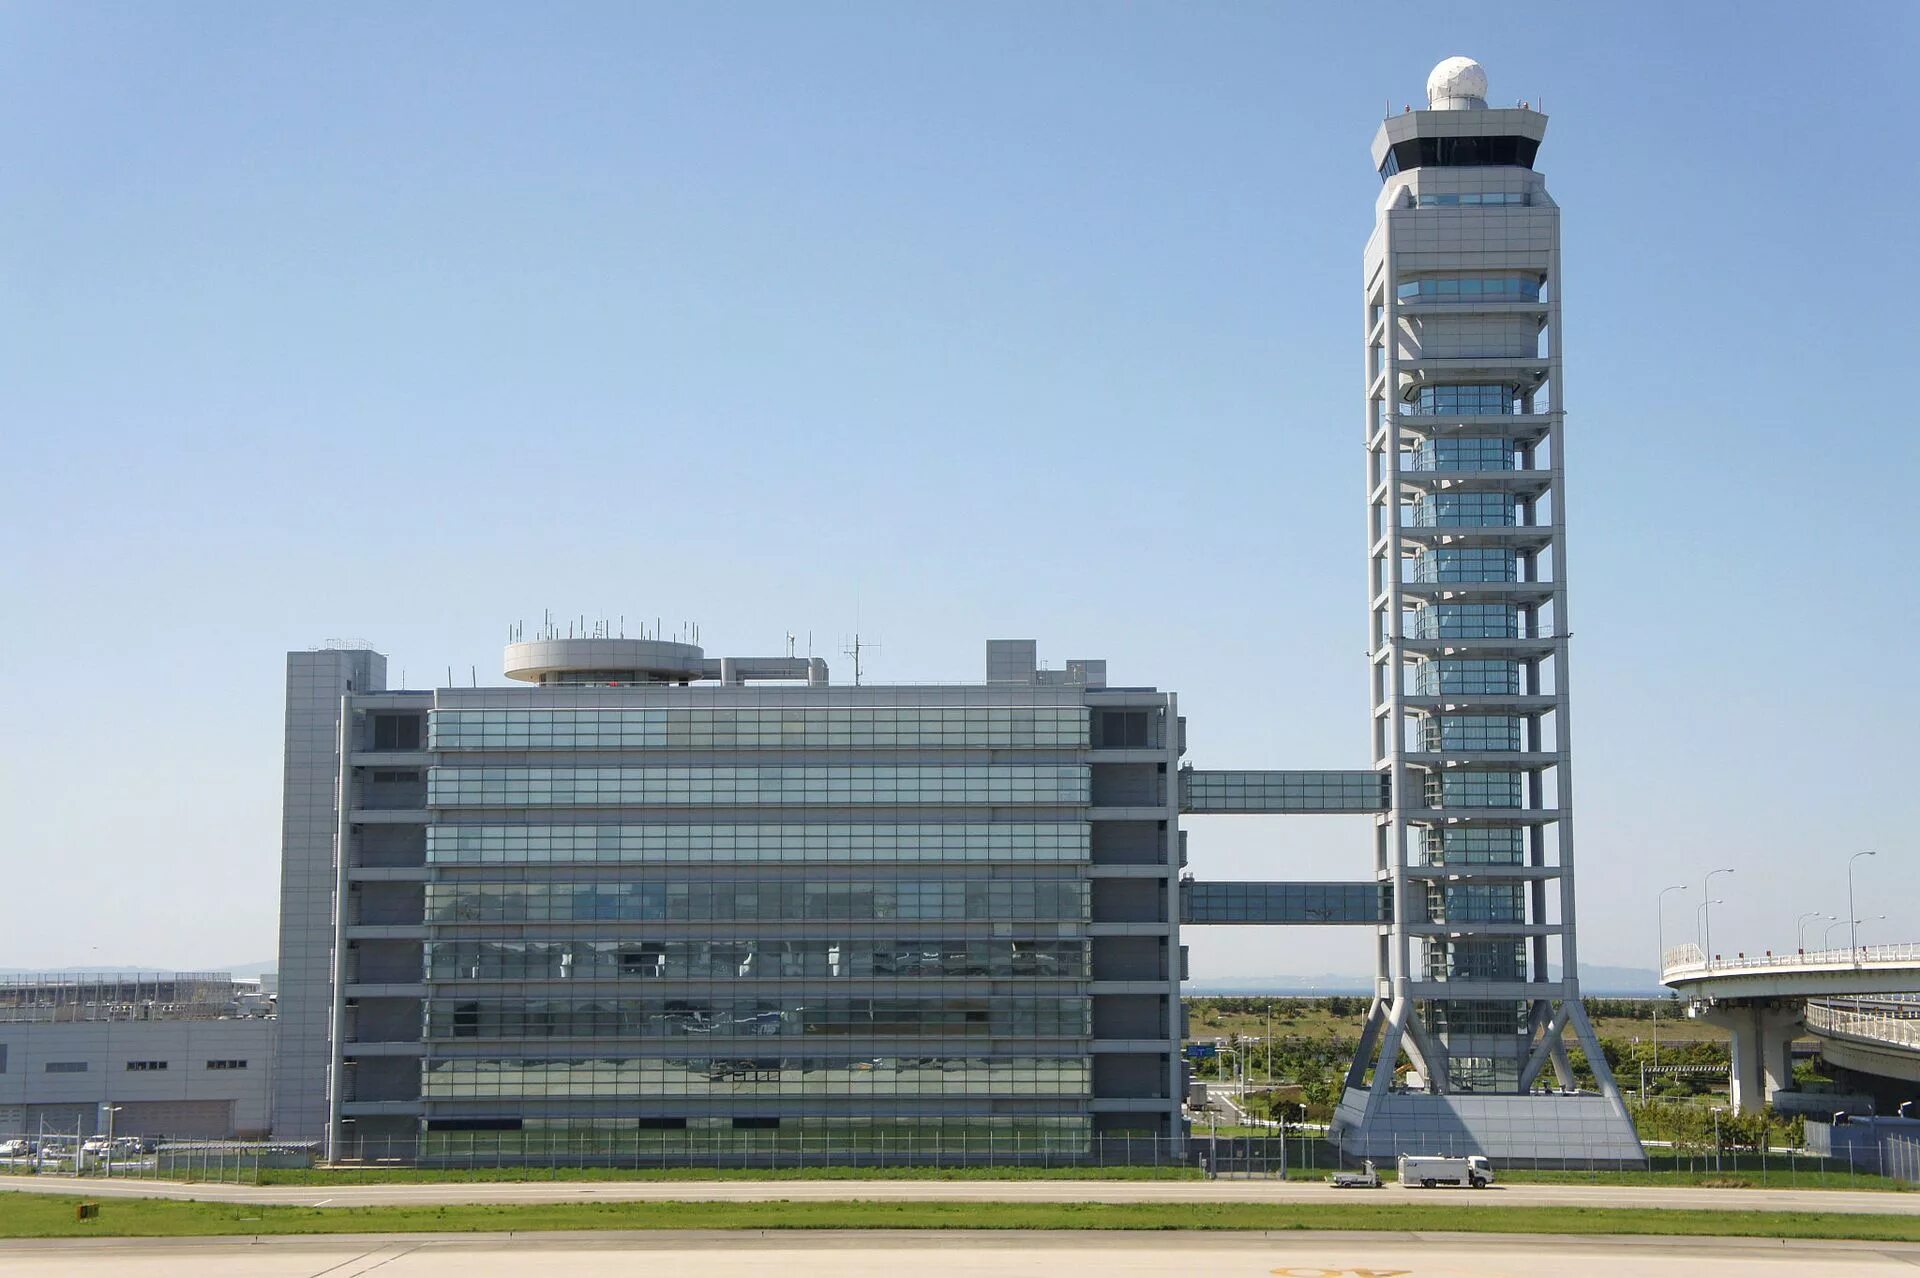 Airport Control Towers. Osaka Kansai International Airport. Башня ATC аэропорт. Высотное здания у аэродрома.